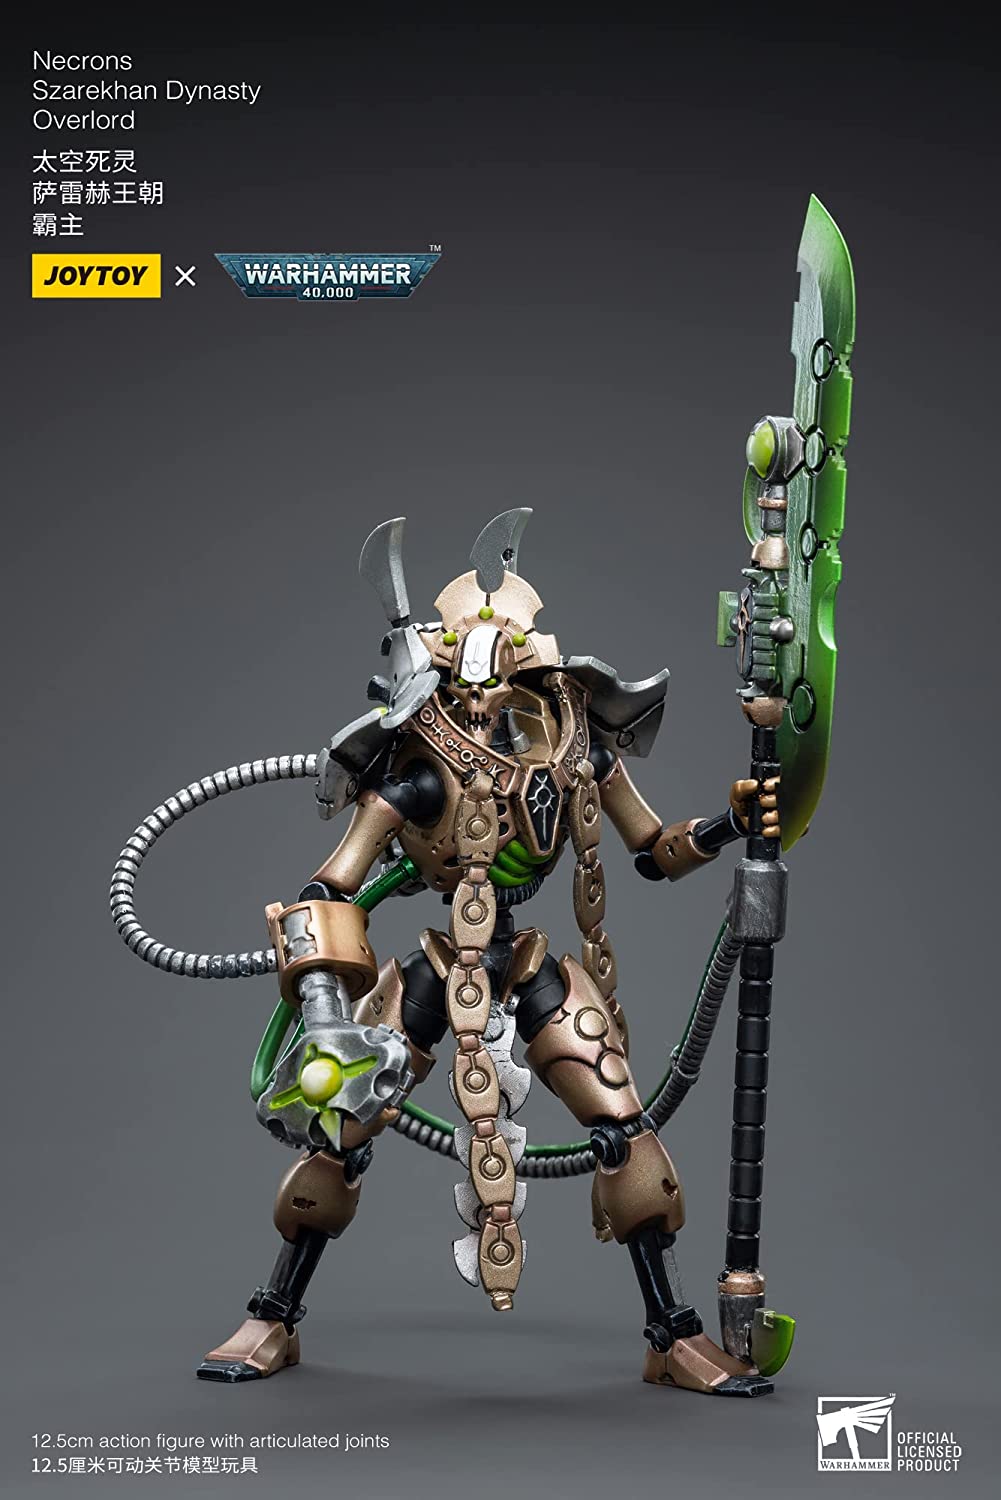 [JoyToy] Warhammer 40k: Necrons Szarekhan Dynasty Overlord 1:18 Scale Action Figure JT4133-1683896450.jpg